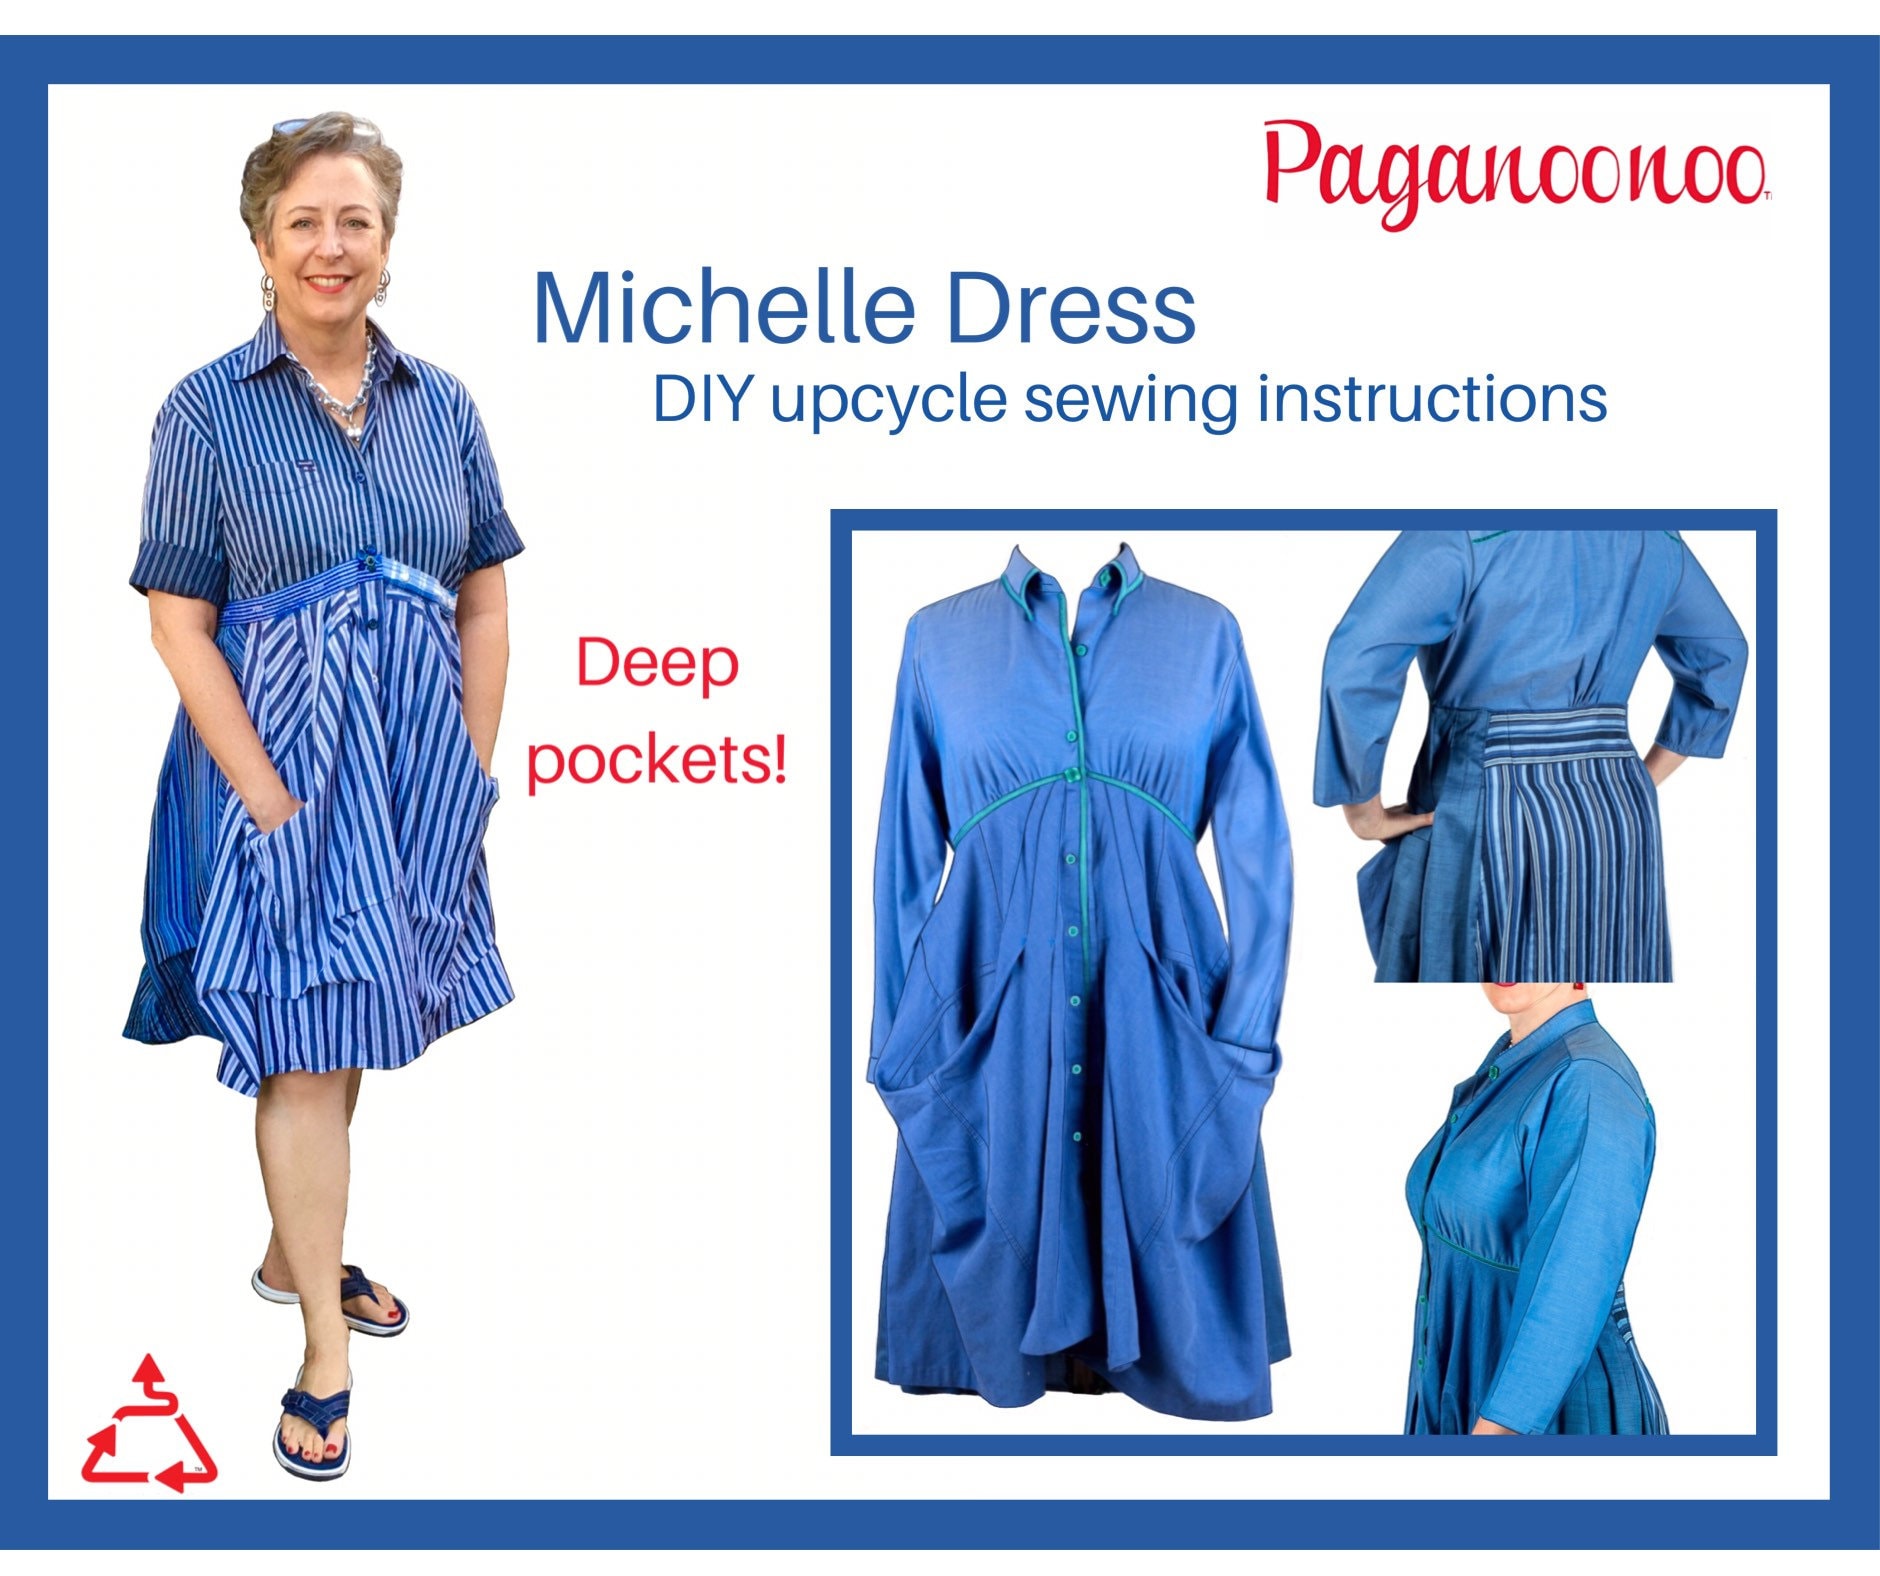 PDF Paganoonoo Michelle Dress huge pockets. | Etsy